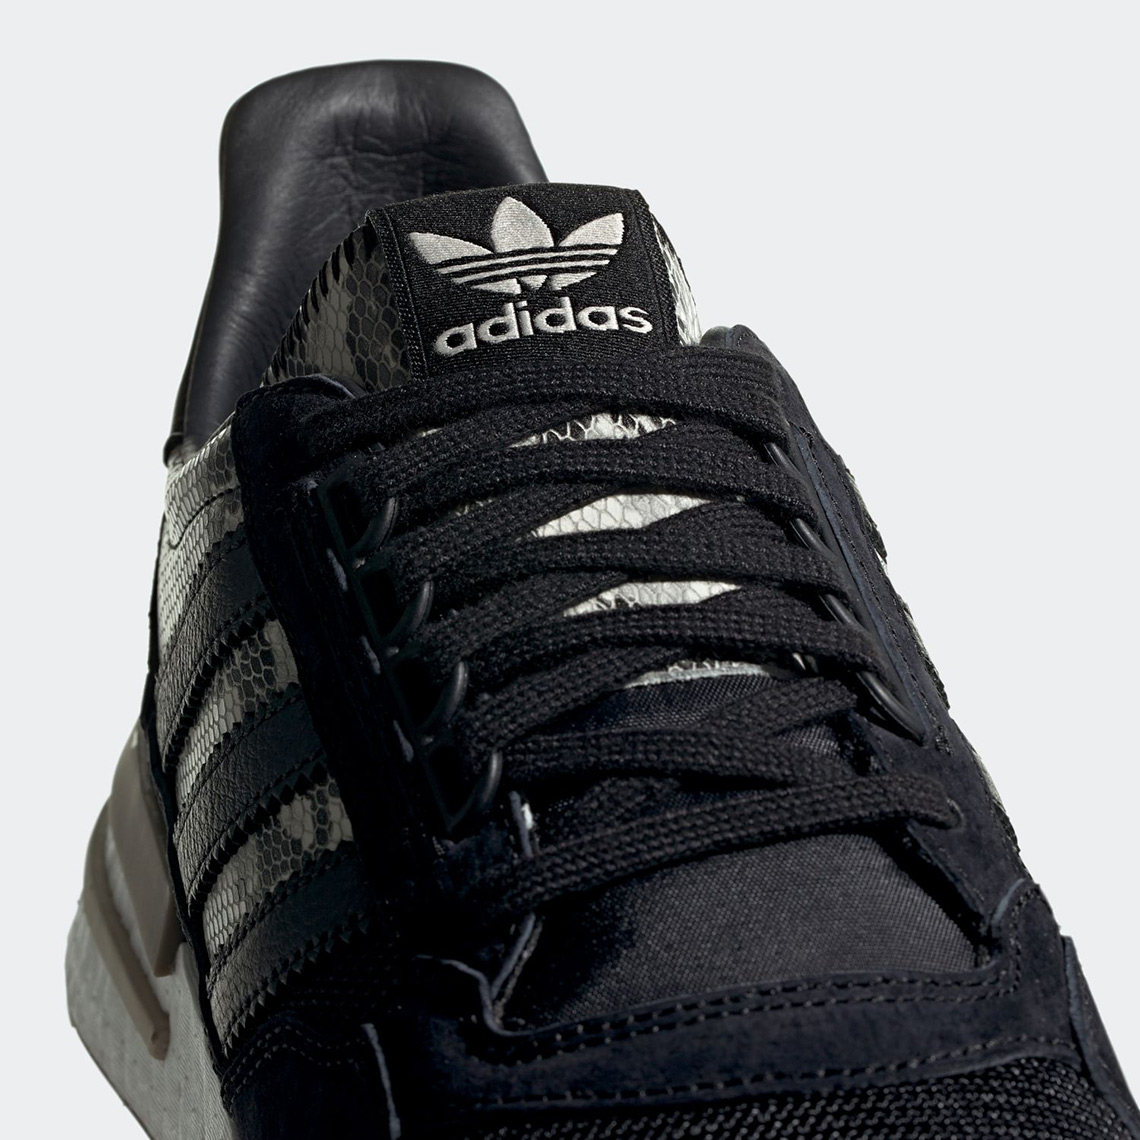 adidas ZX 500 RM Snakeskin BD7924 Release Info | SneakerNews.com